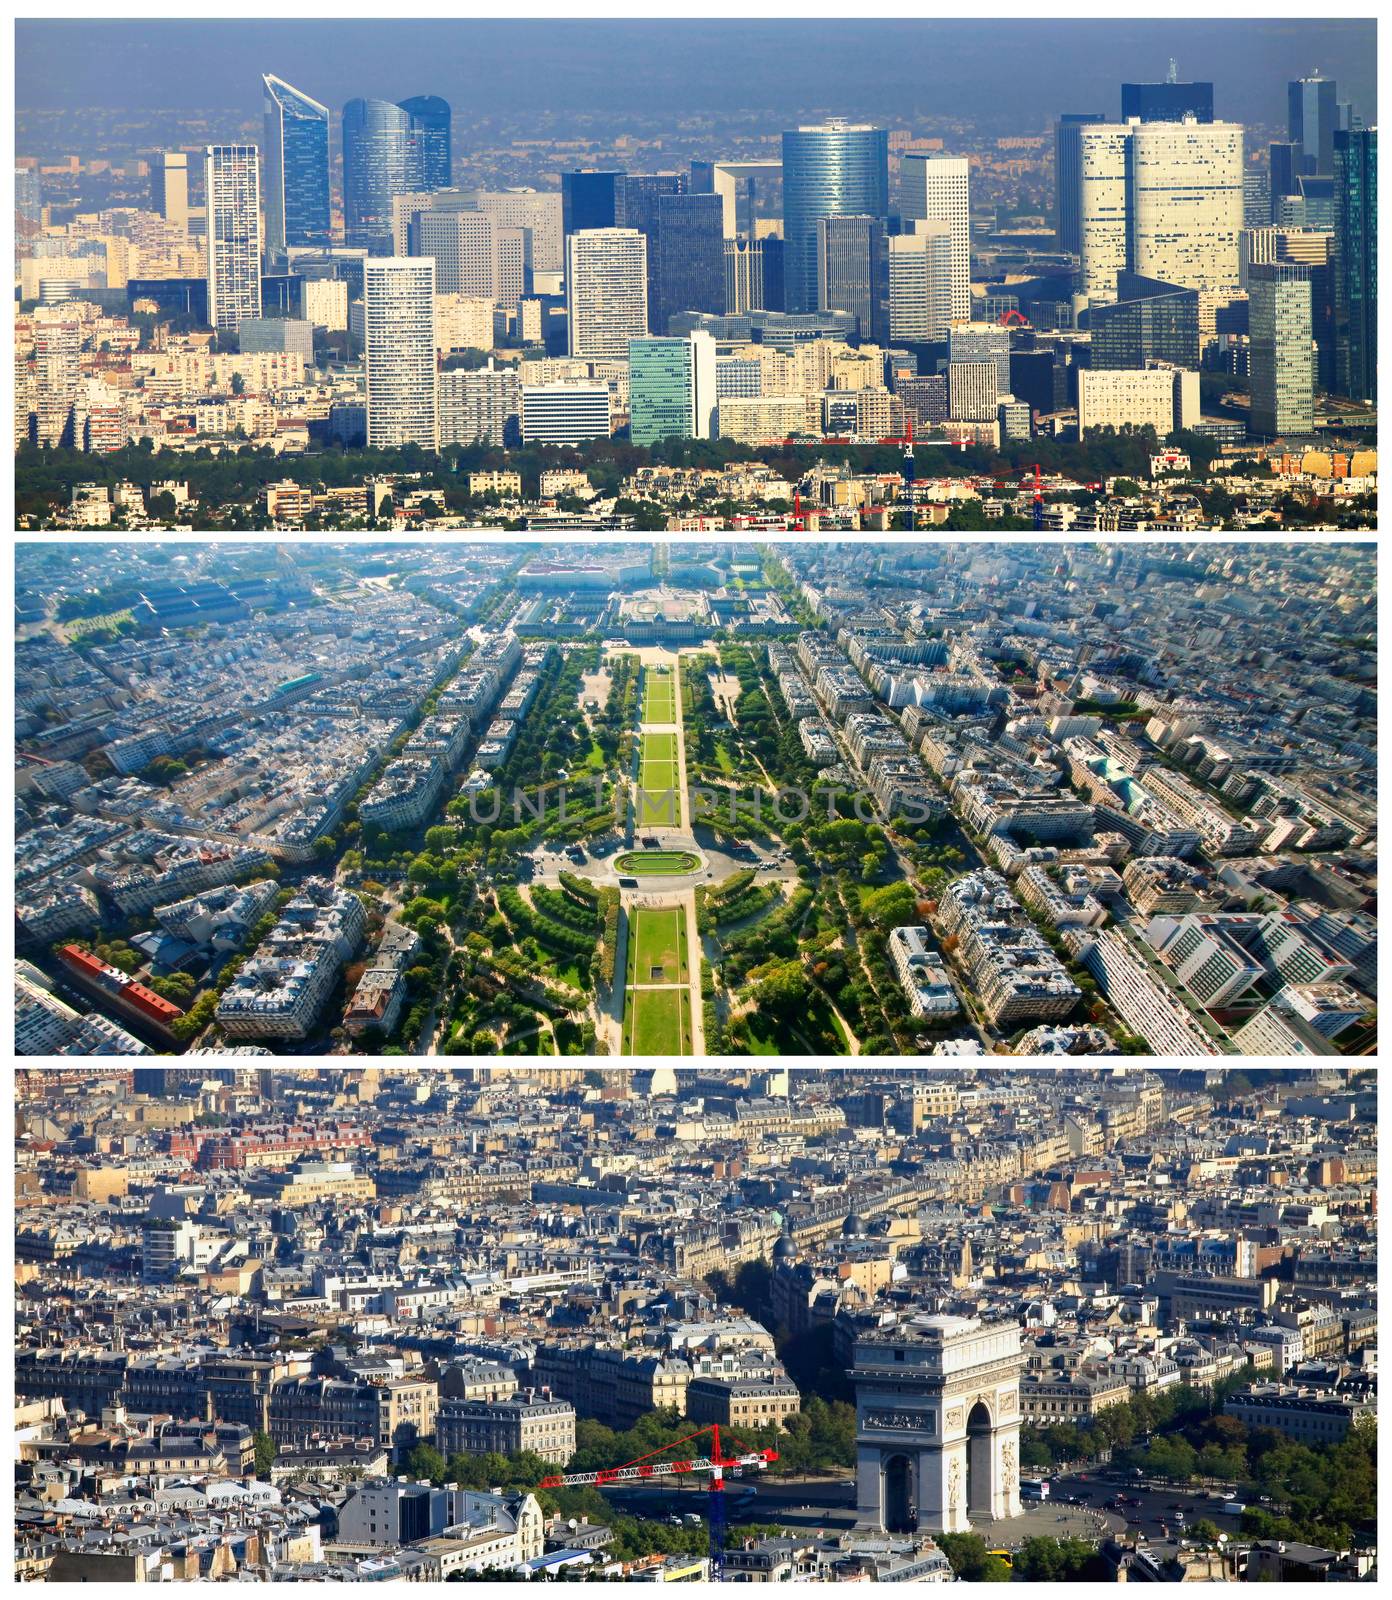 Collage set of Paris images